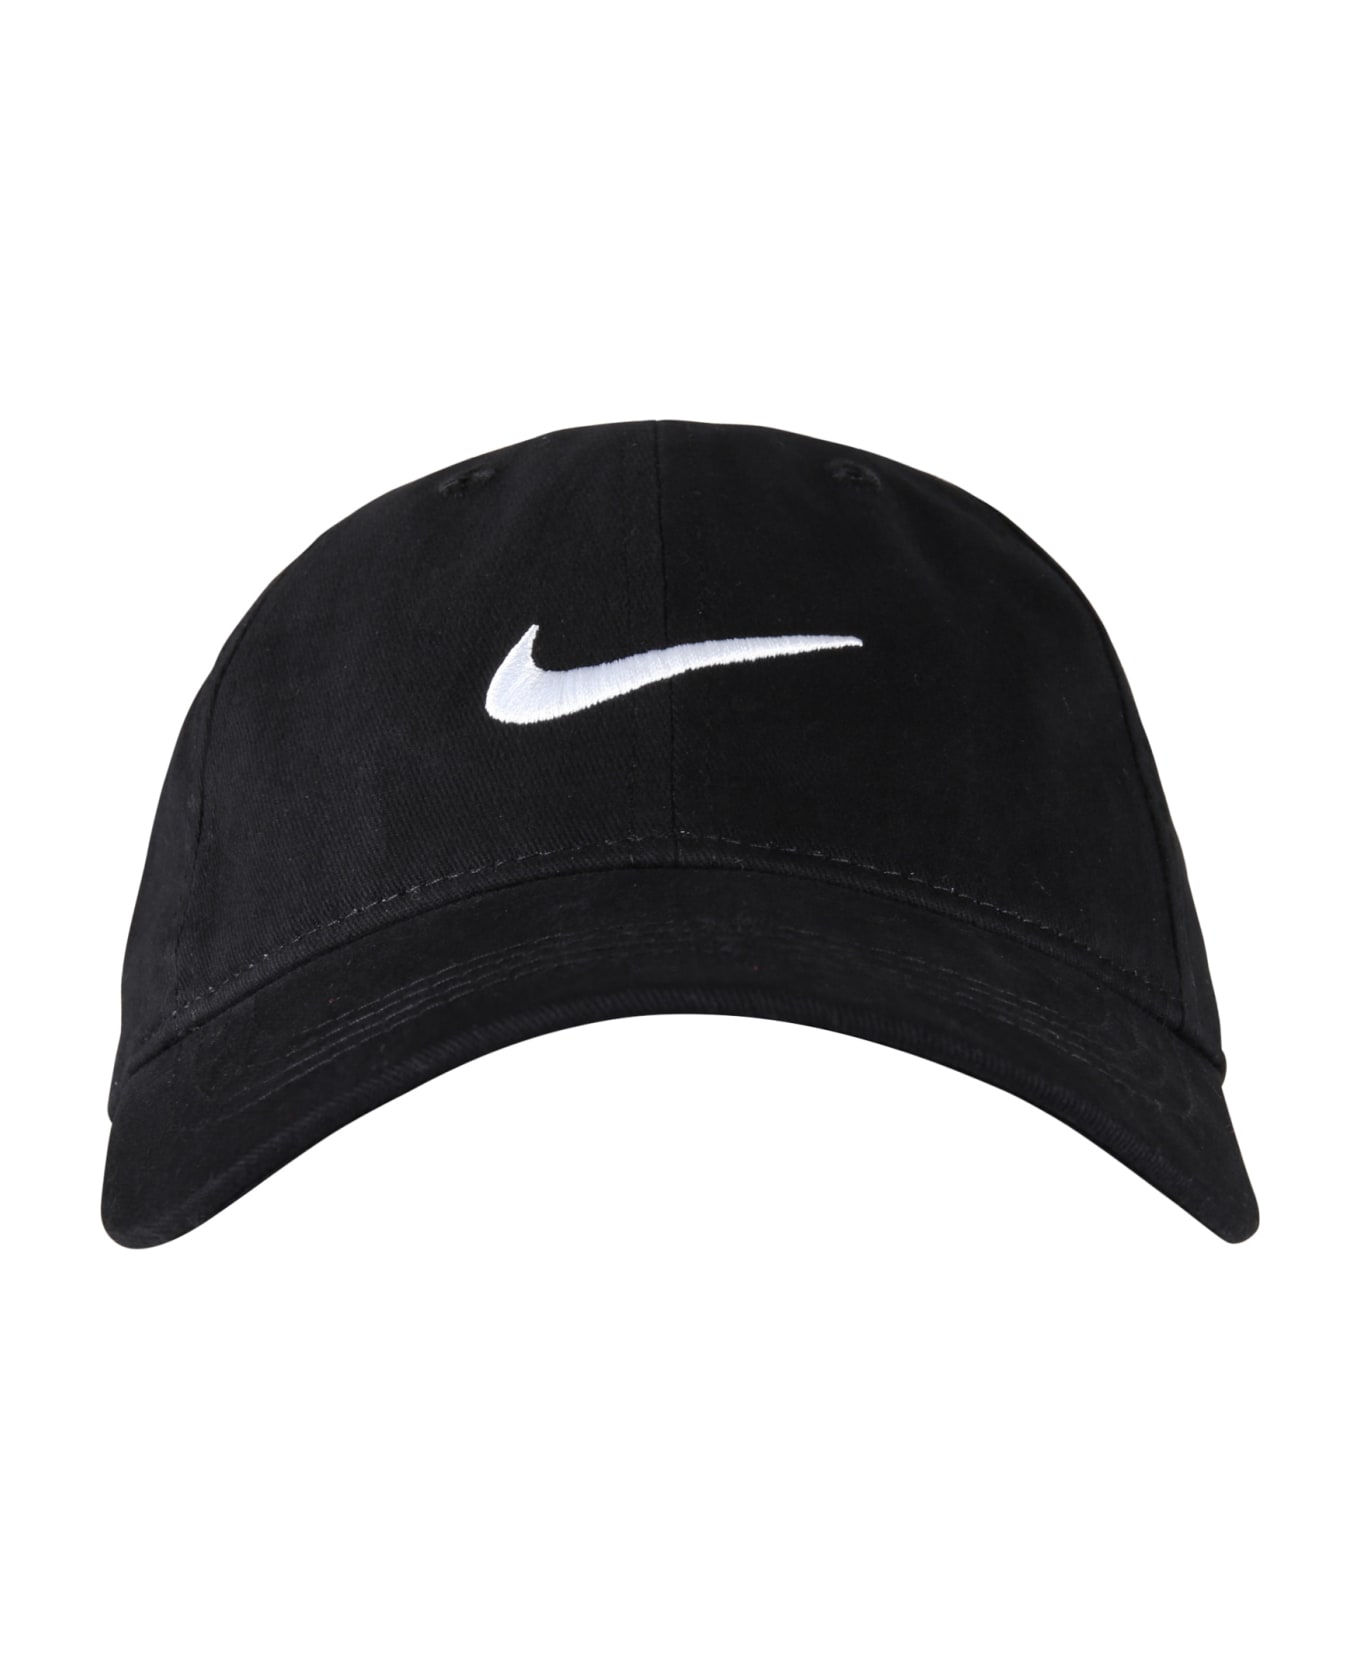 Nike Black Hat For Kids - Black アクセサリー＆ギフト